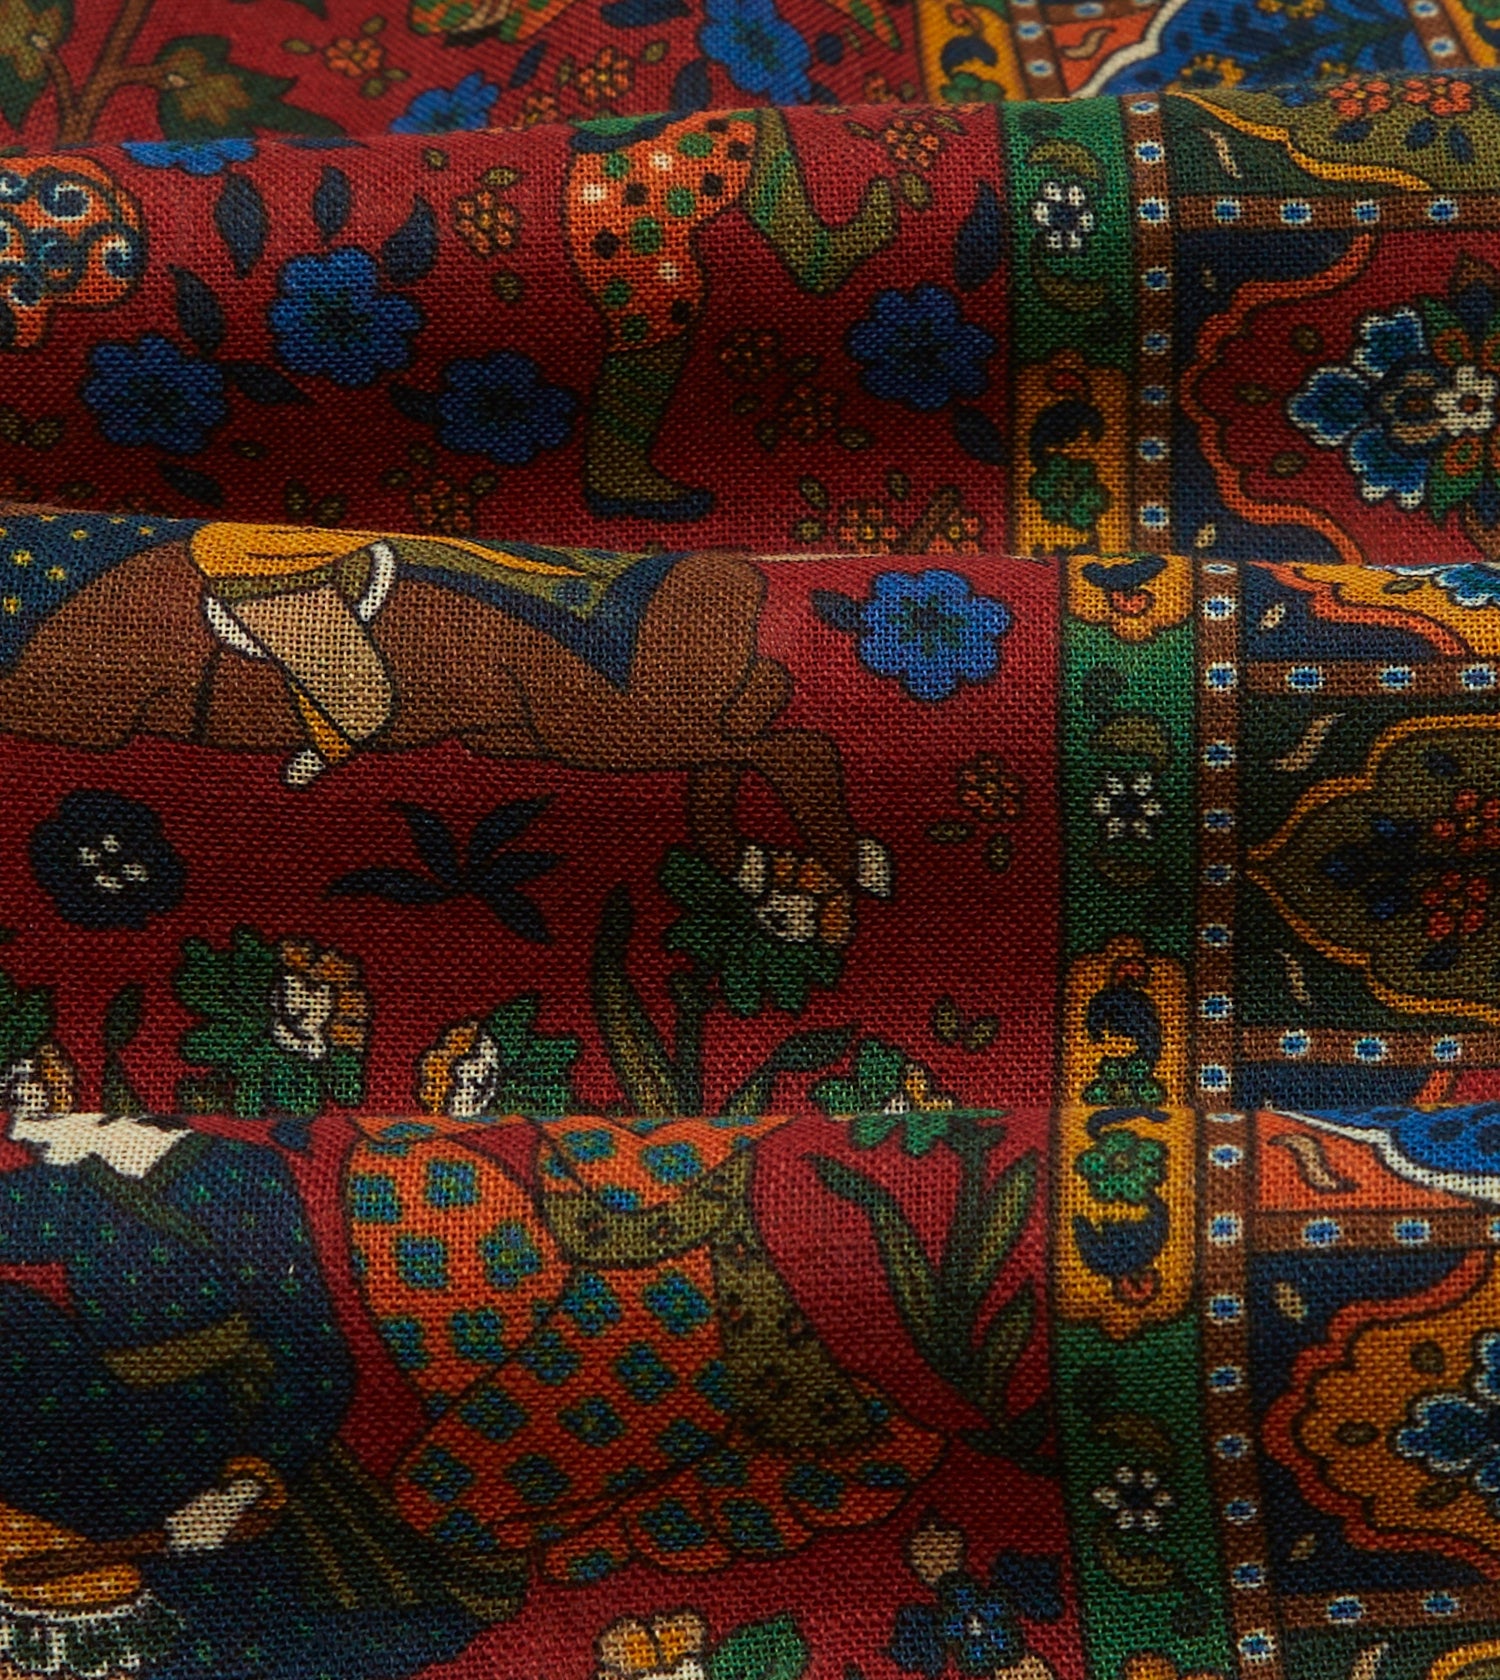 Red Mughal Hunter Print Wool-Silk Scarf